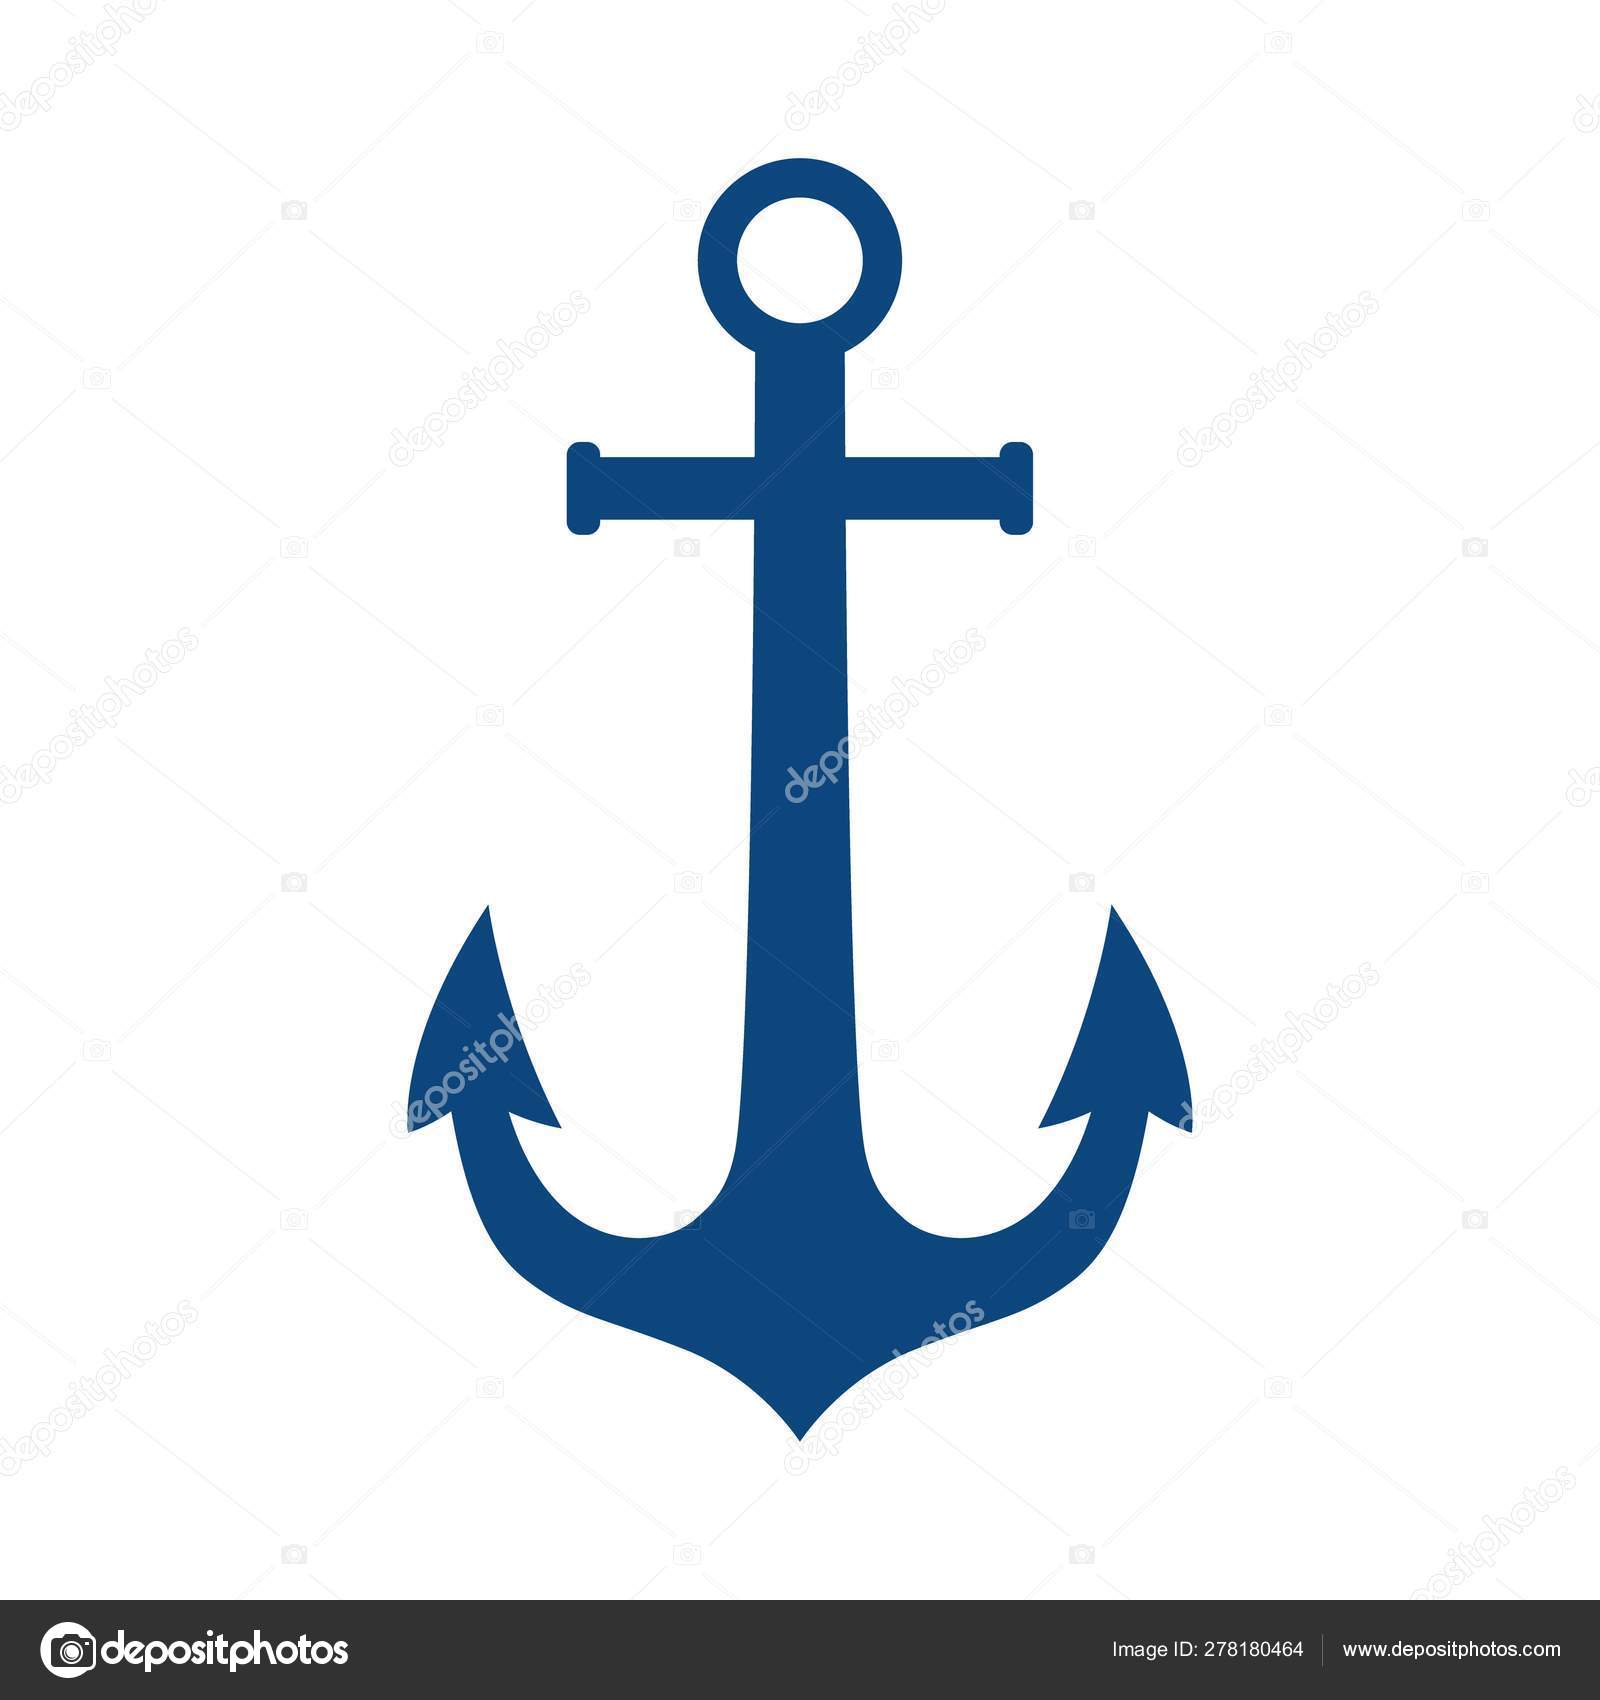 https://st4.depositphotos.com/21504332/27818/v/1600/depositphotos_278180464-stock-illustration-anchor-vector-logo-blue-icon.jpg